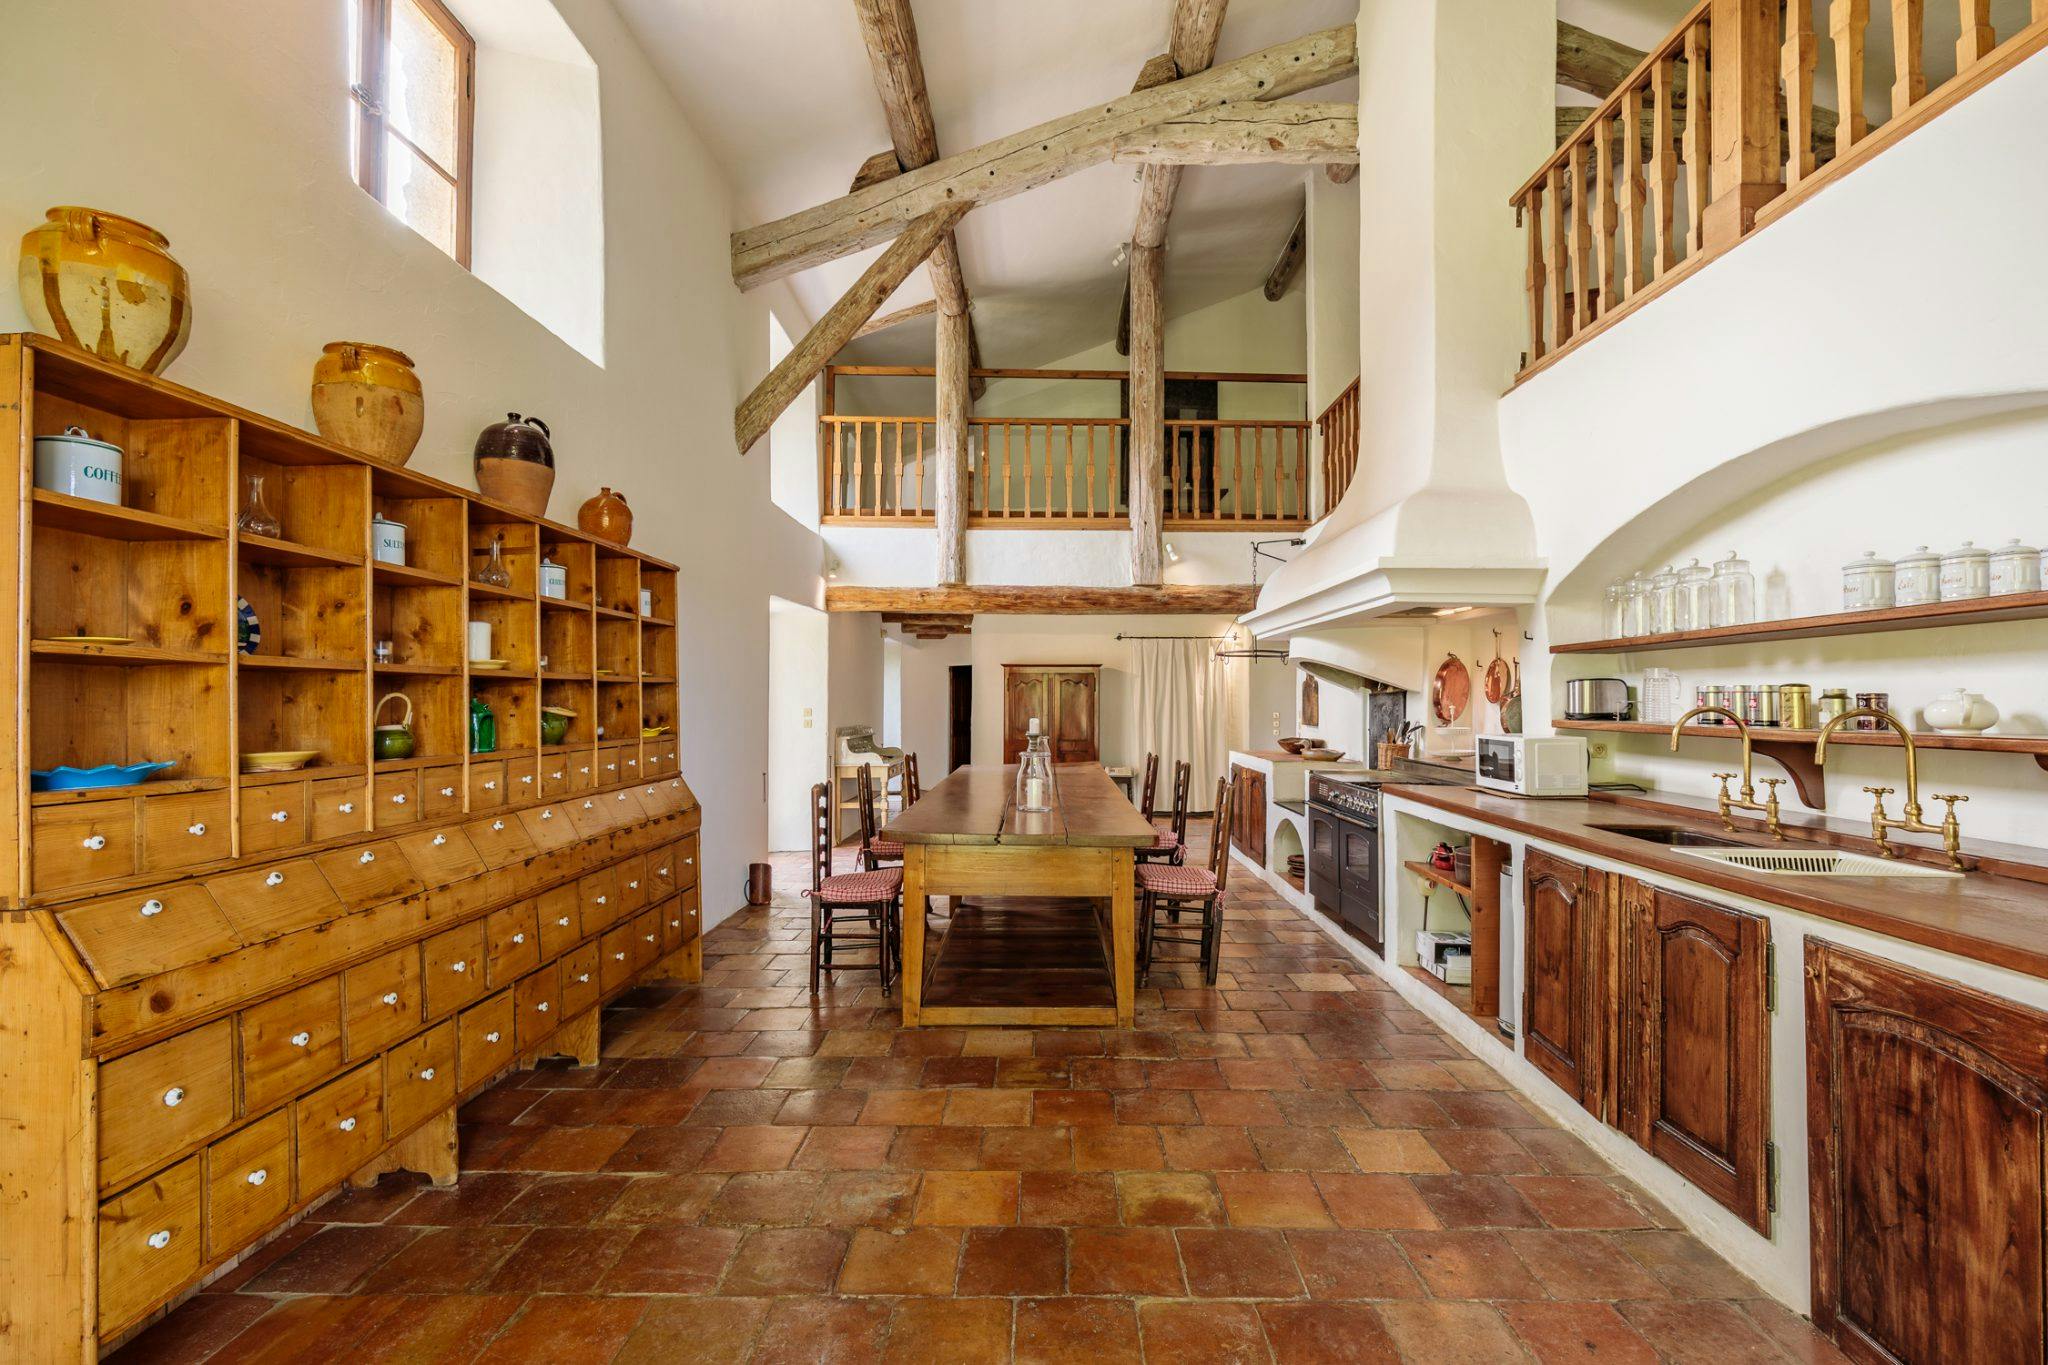 The fully wooden kitchen of Château de Sannes